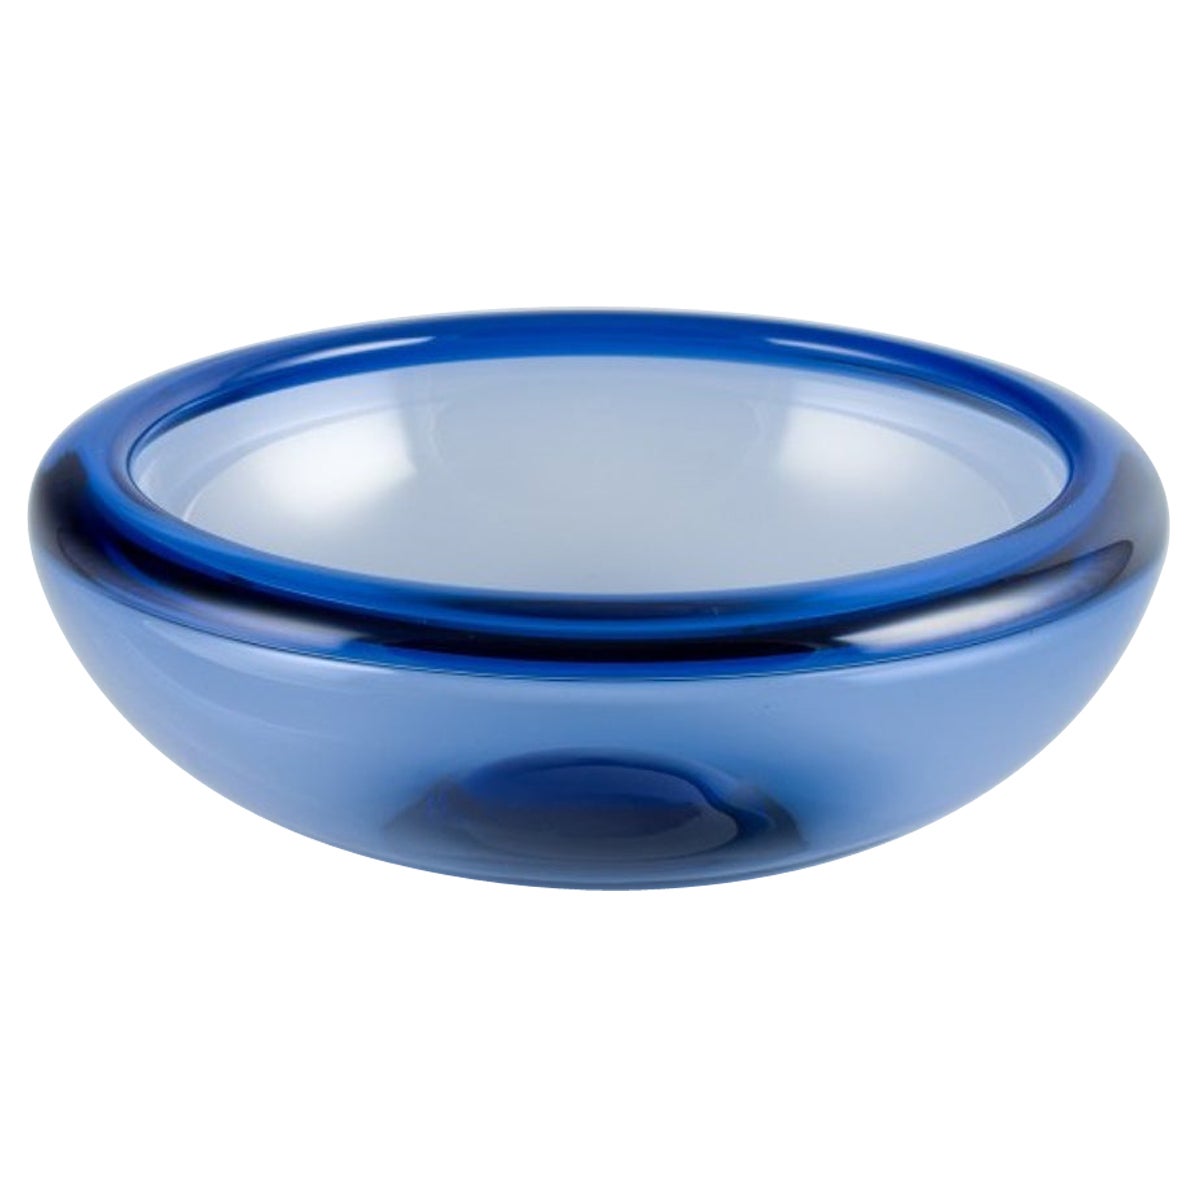 Holmegaard, Denmark. "Provence" bowl in blue art glass. 1970s. For Sale